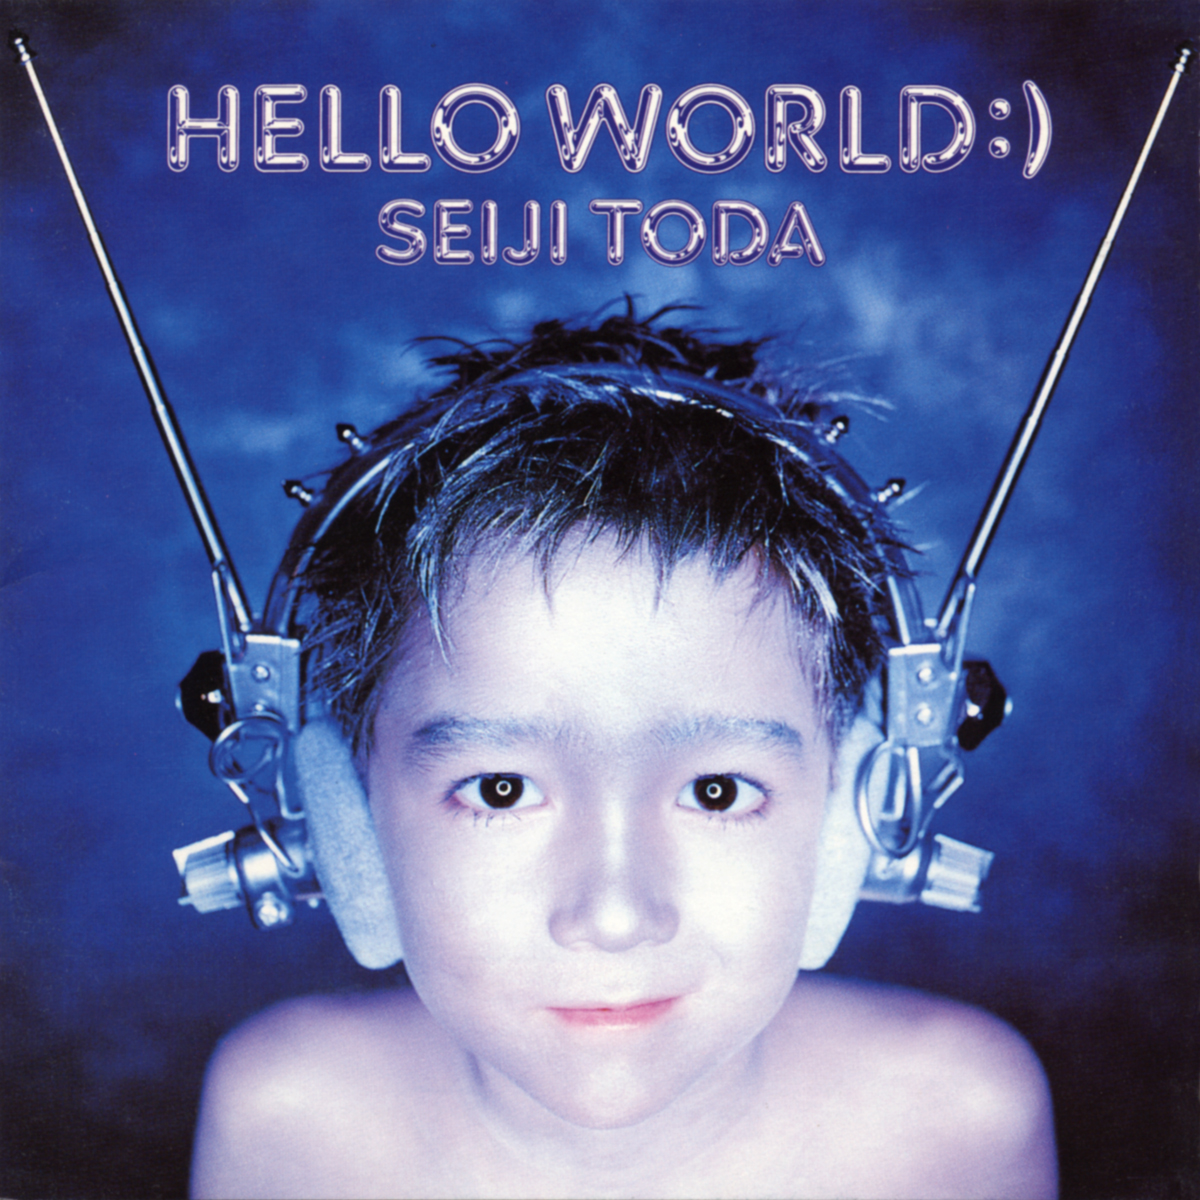 Seiji Toda “Hello World:)”